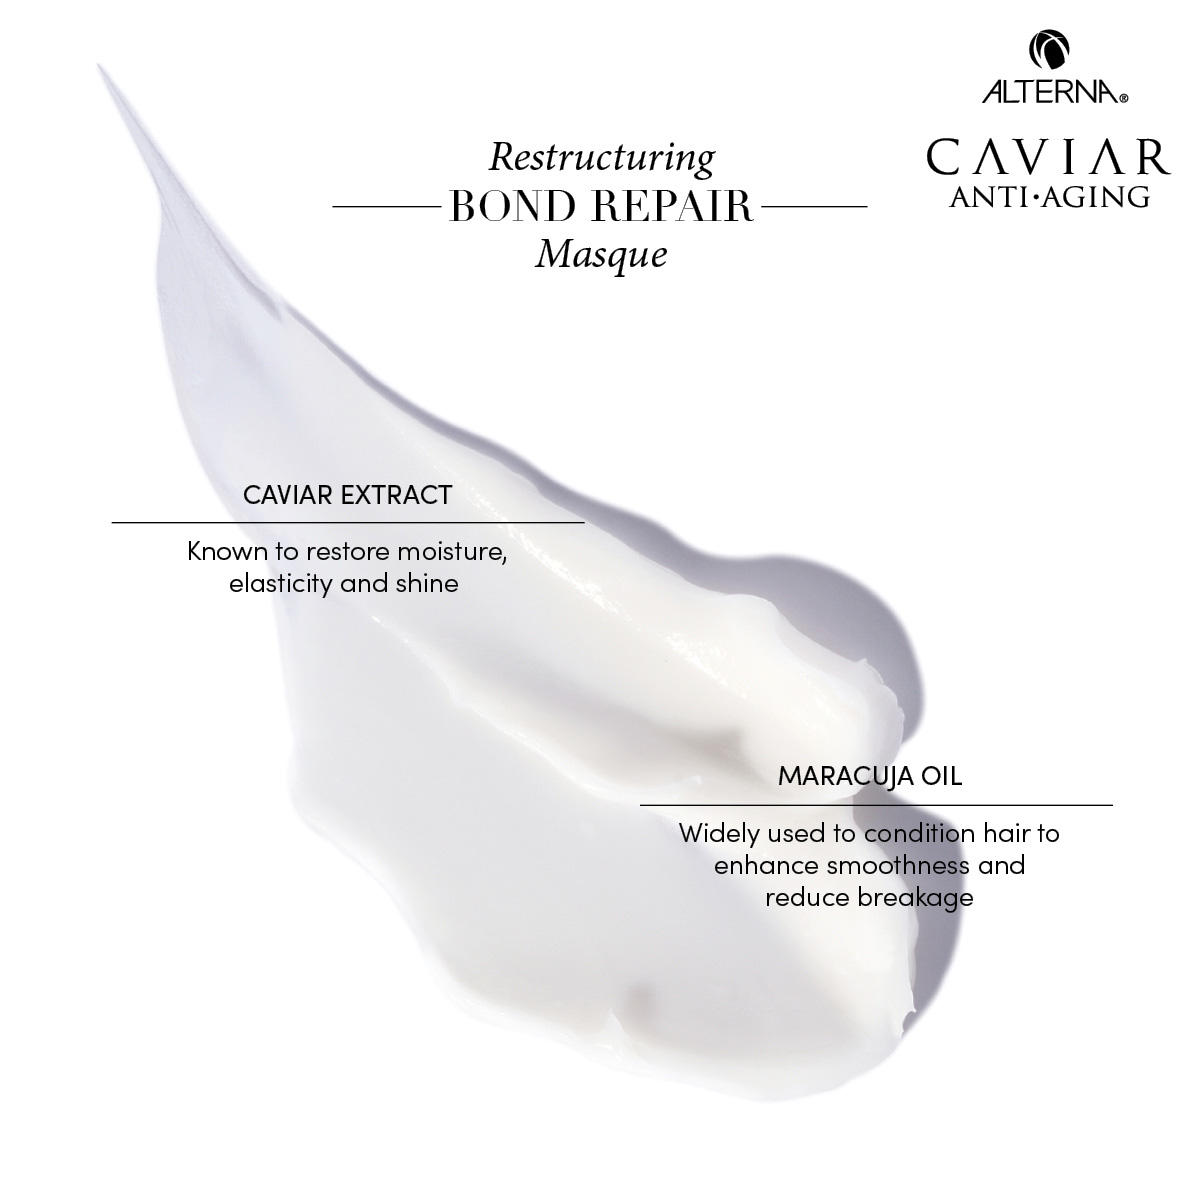 Alterna Caviar Anti-Aging Restructuring Bond Repair Máscara 169 g - 4